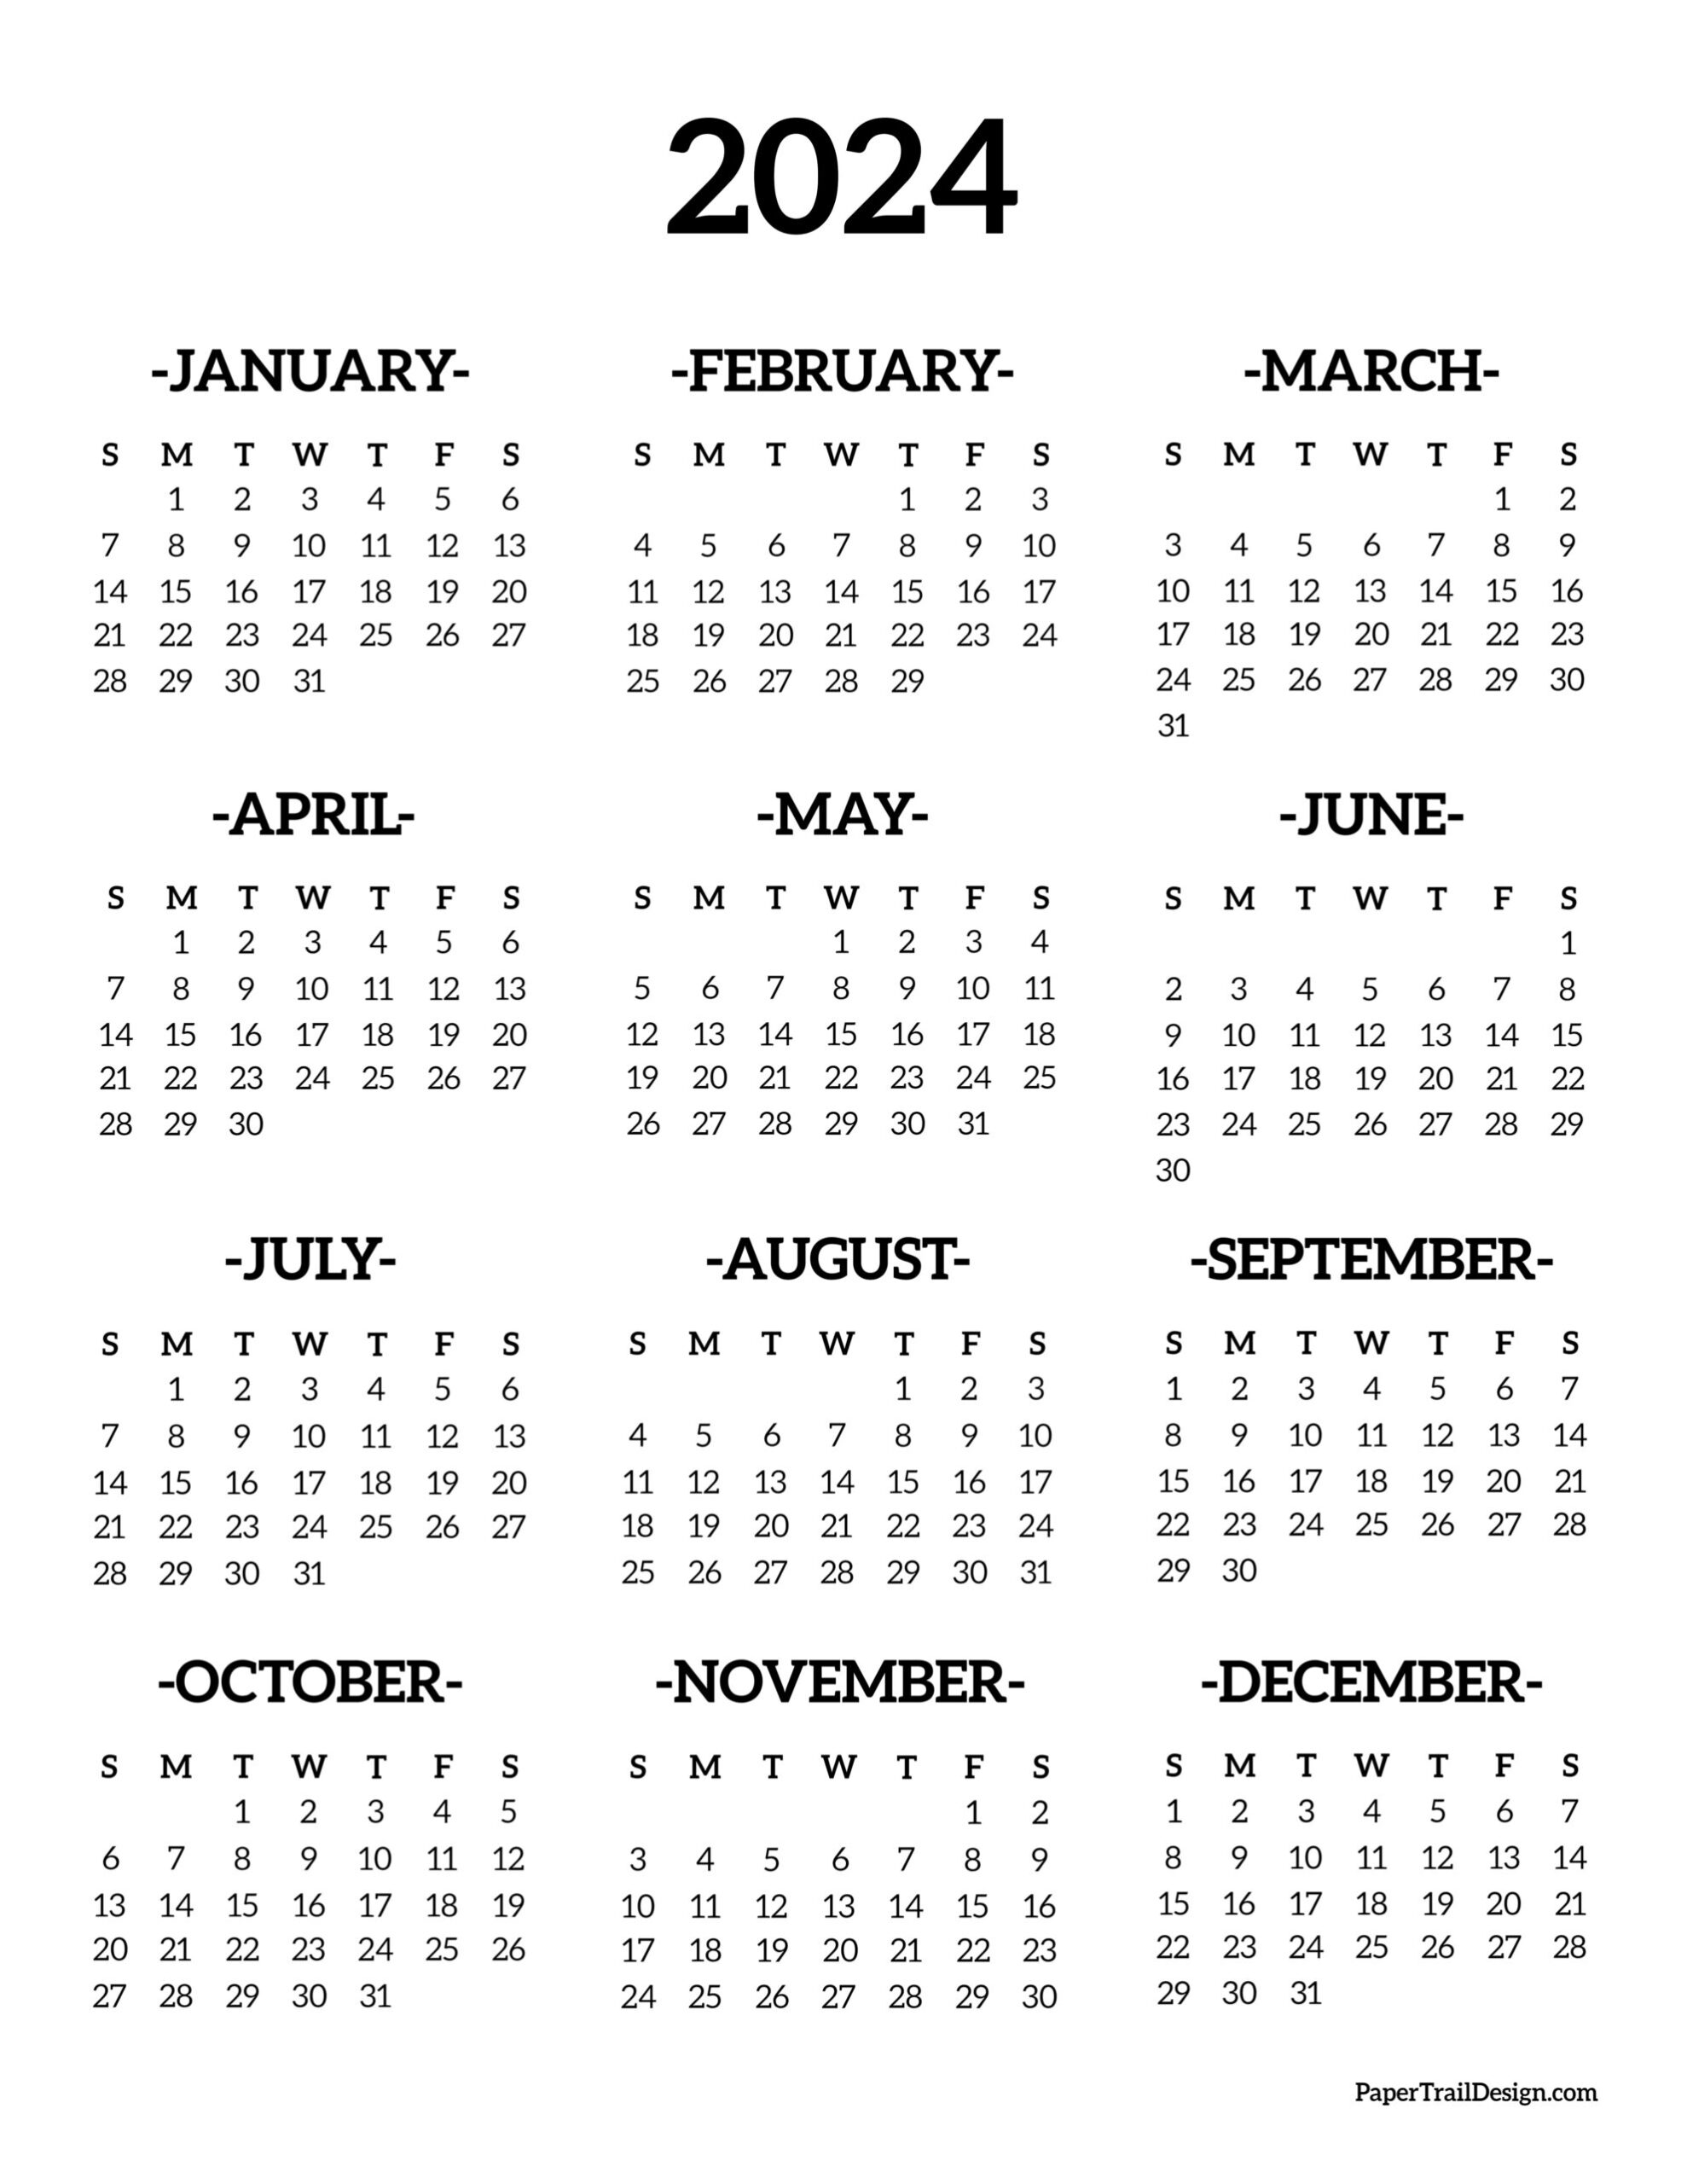 Calendar 2024 Printable One Page - Paper Trail Design for Annual Calendar Printable 2024